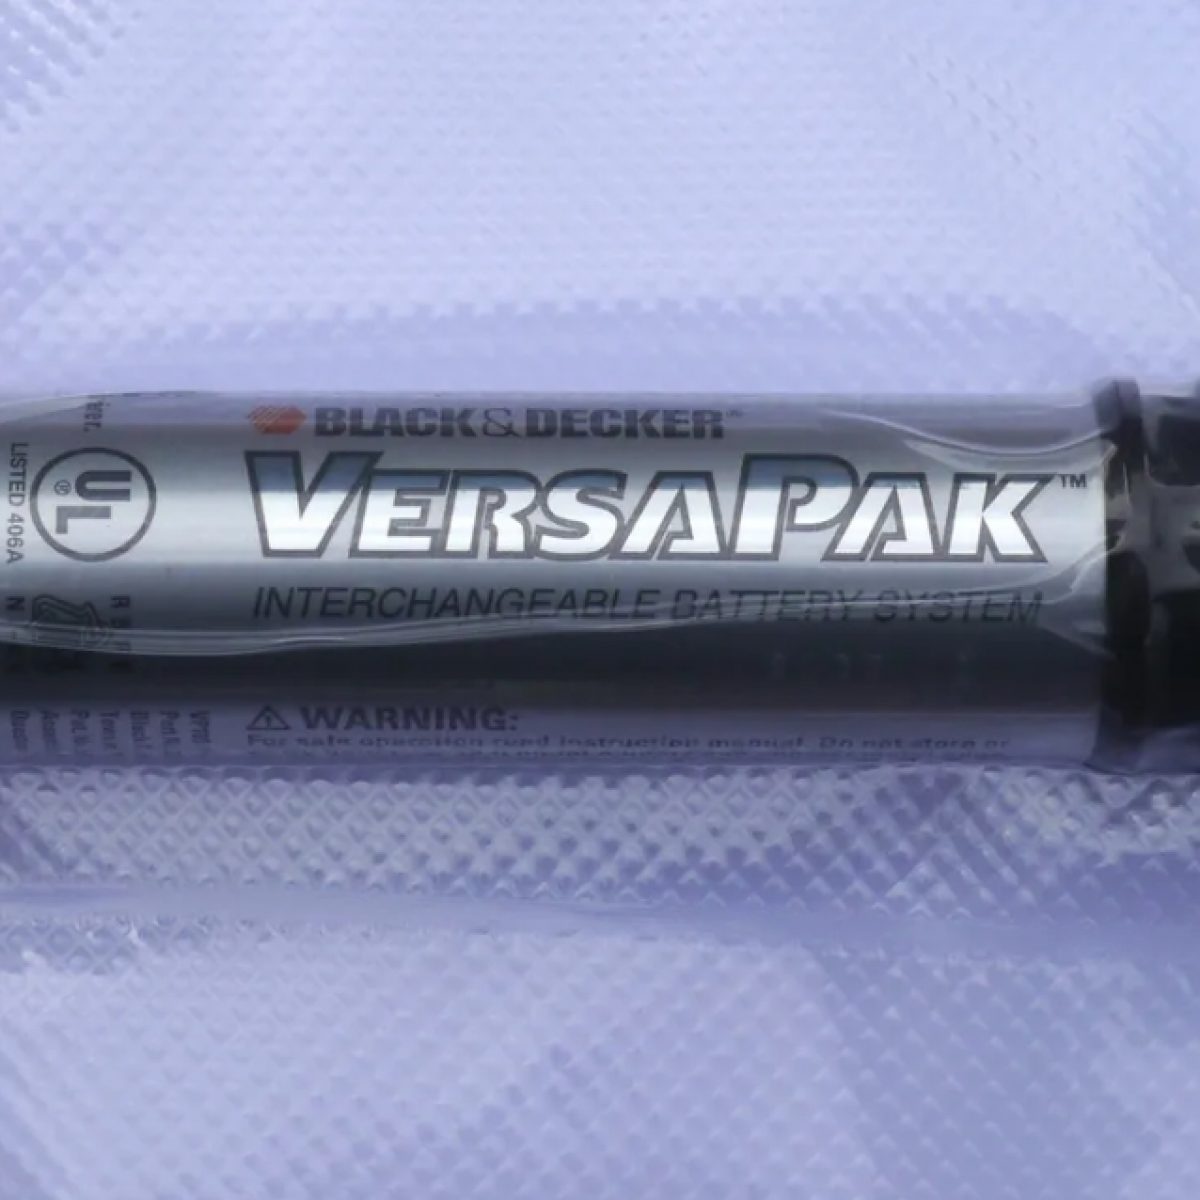 Shentec 2 Pack 3.5Ah 3.6V Replacement Battery Compatible with Black & Decker Versapak VP100 Vp105 VP110 Vp142 VP143 Sears-Craftsman Pivot180 Plr36nc